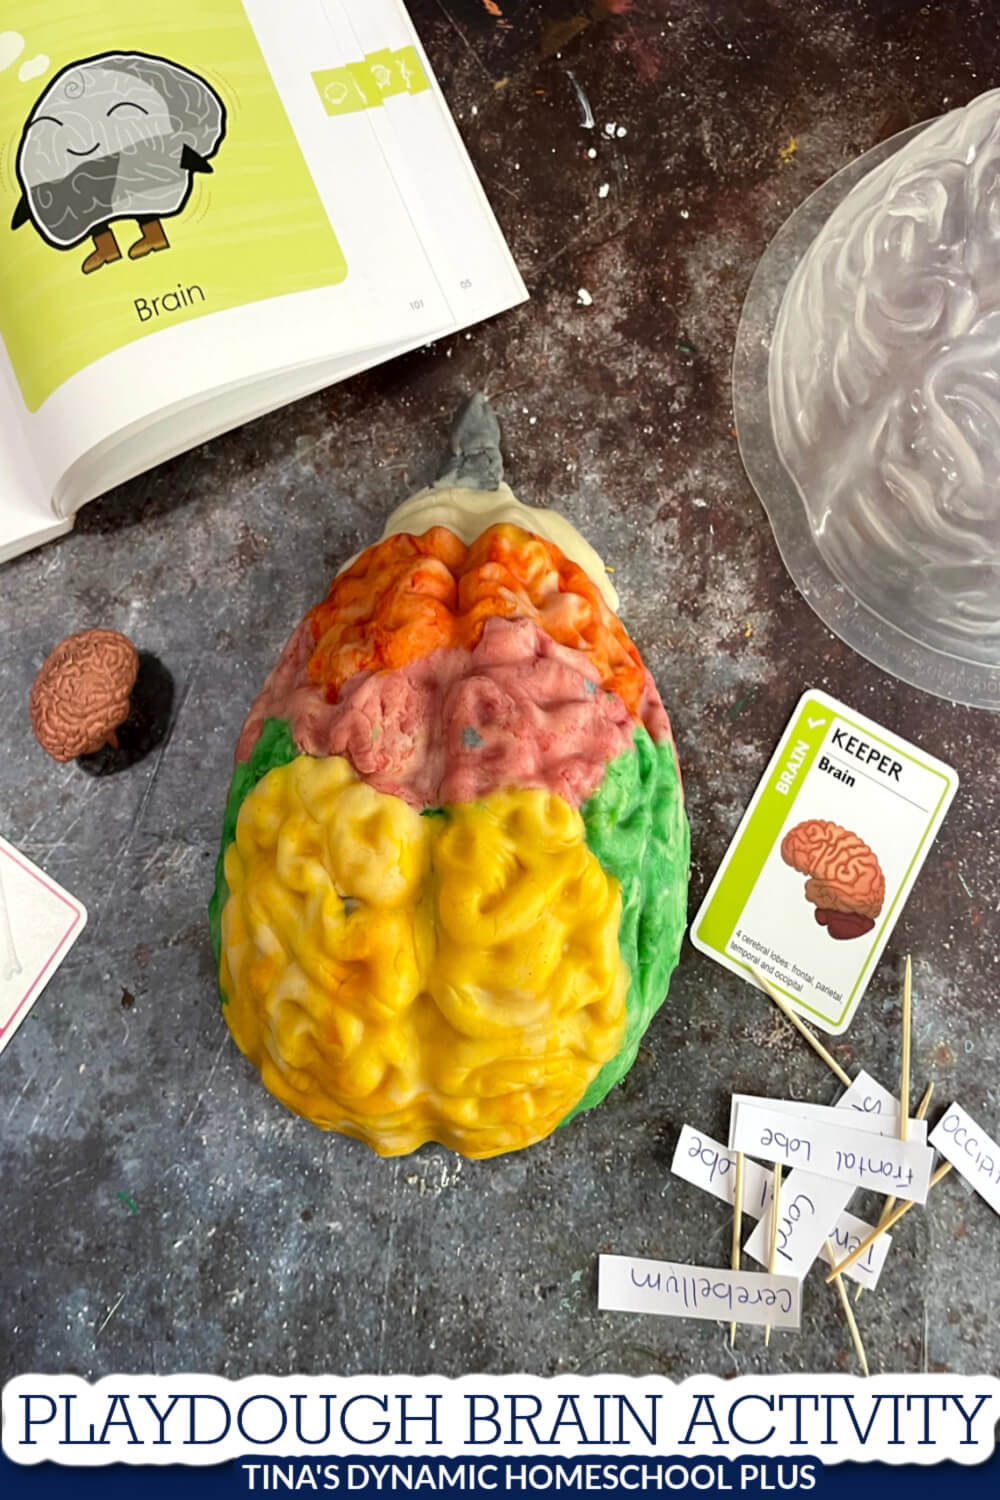 How to Make the Best Black Playdough Recipe Ever! - Left Brain Craft Brain